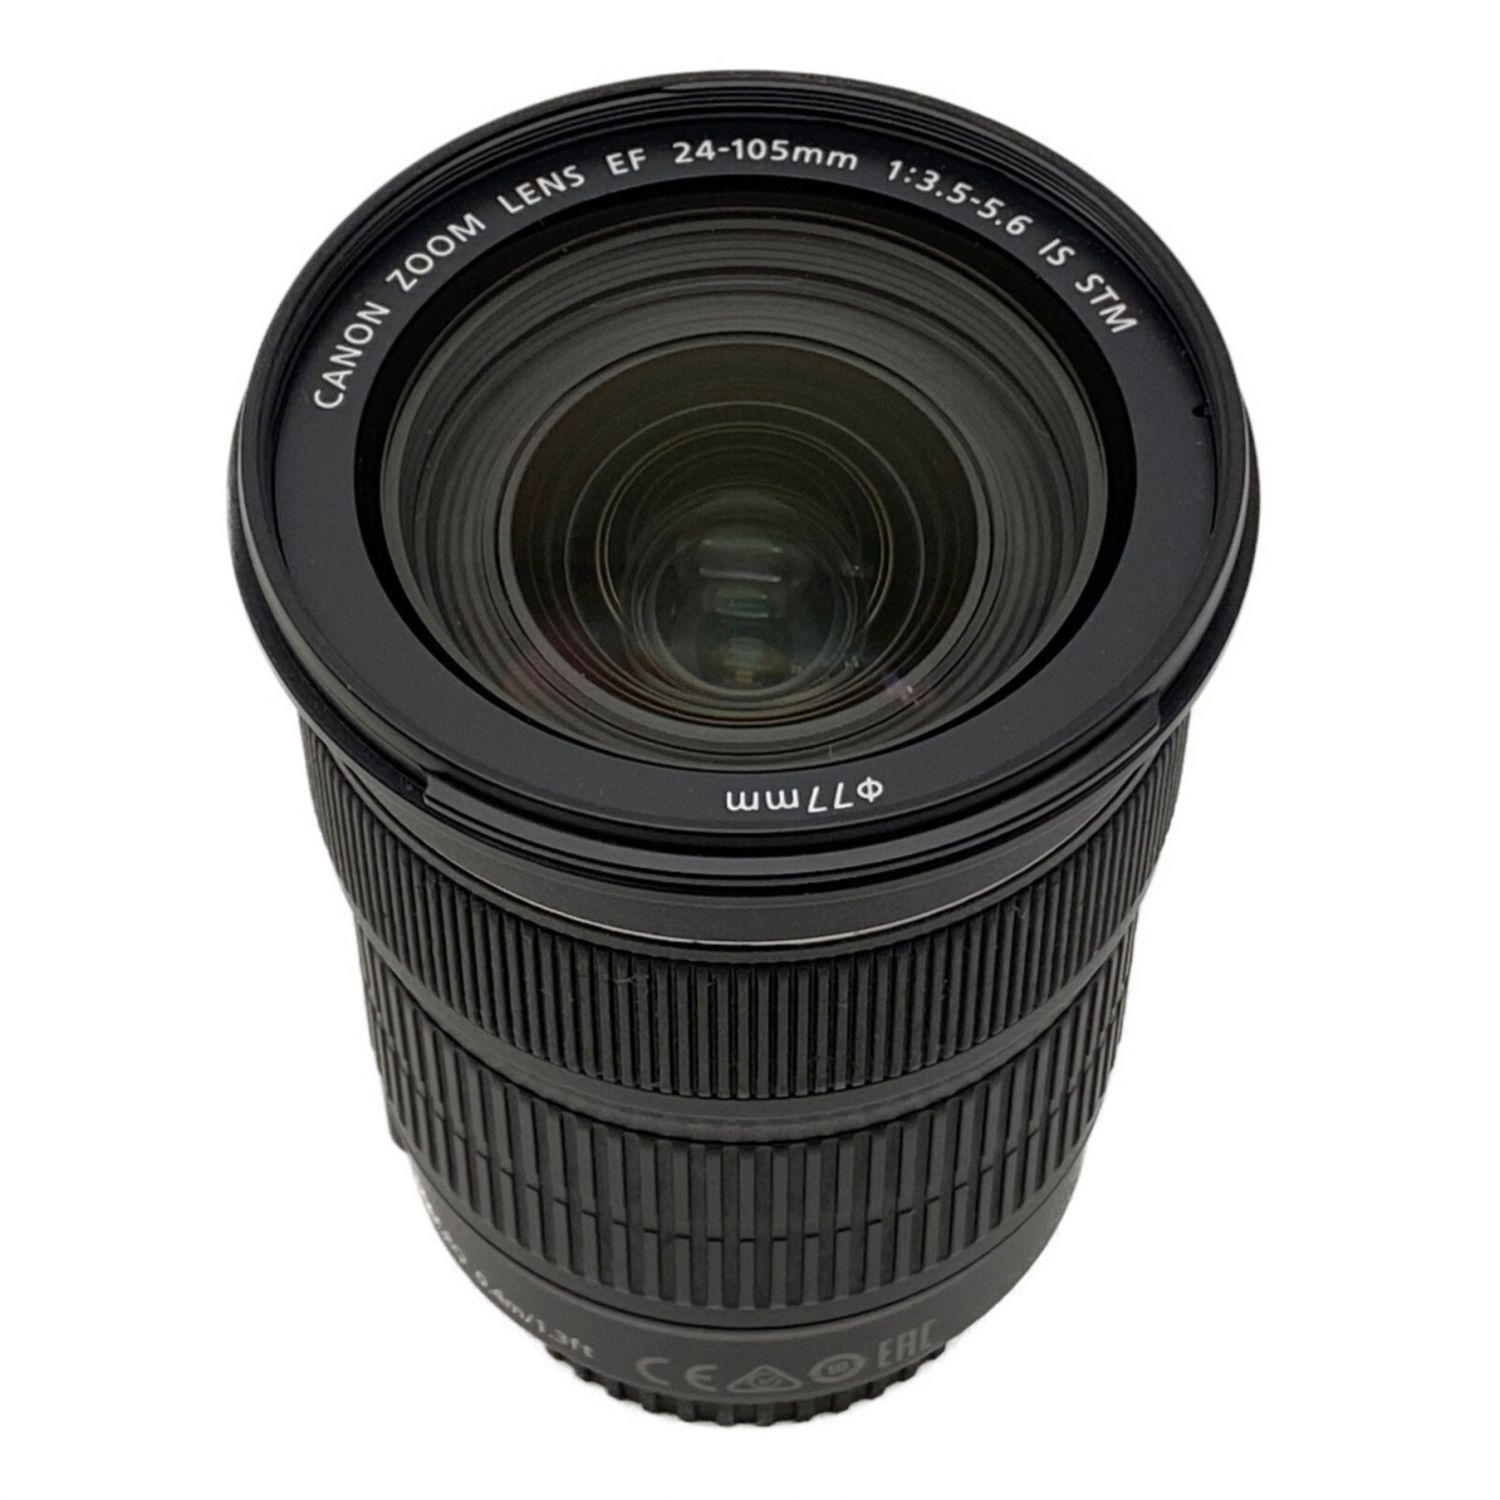 Canon EF 24-105mm 1:3.5-5.6 IS STM キャノン - カメラ